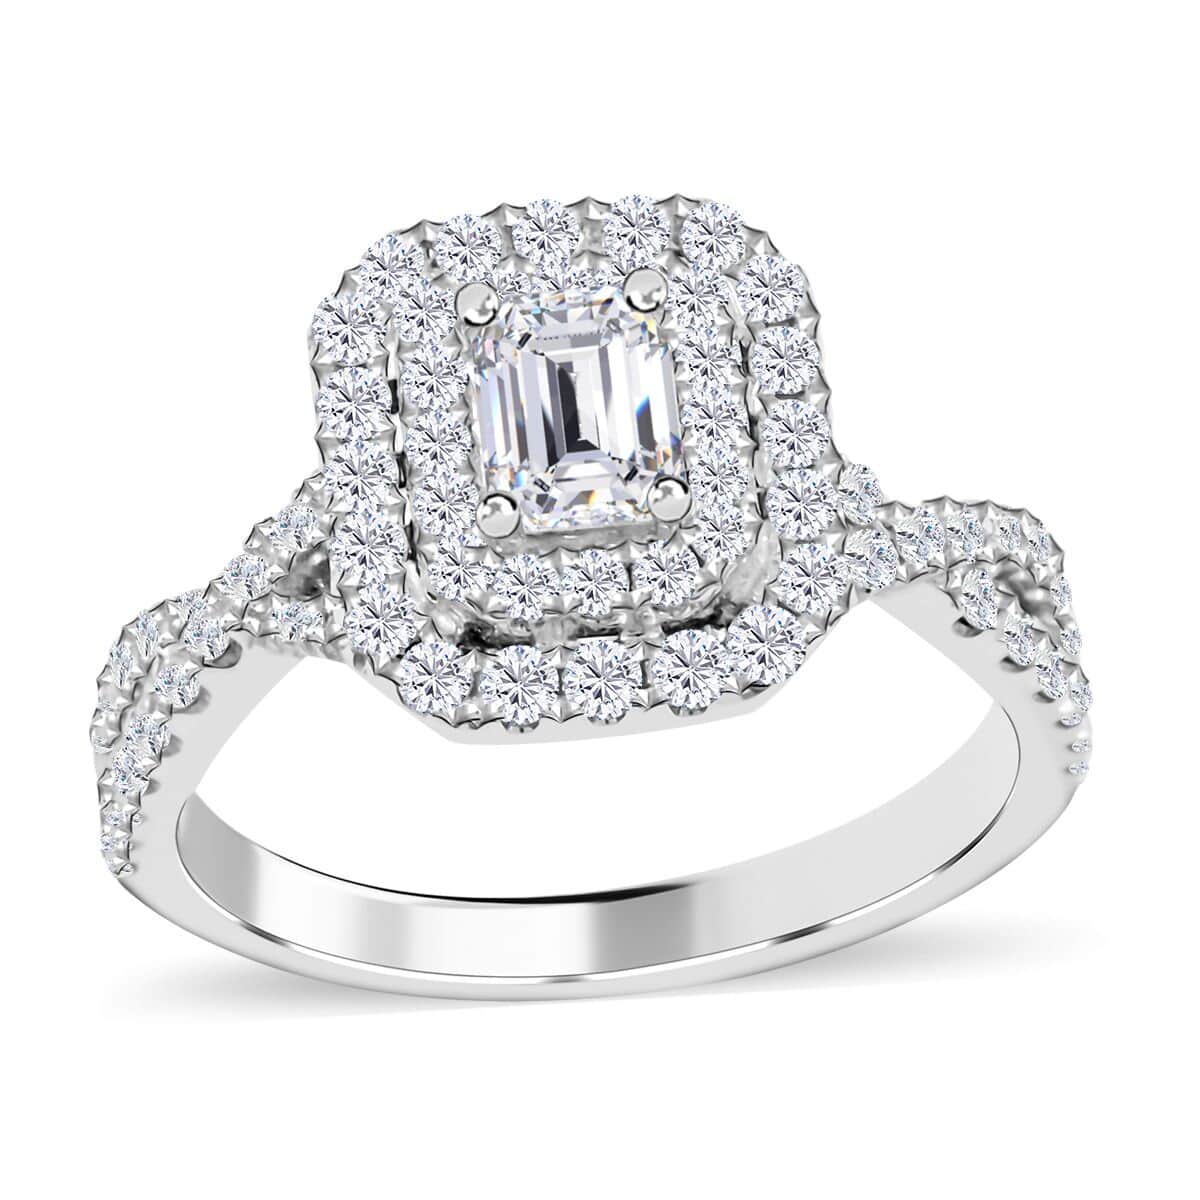 Modani 950 Platinum Diamond SI - GH Ring (Size 10.0) 7 Grams 1.30 ctw (Del. in 15-20 Days) image number 0